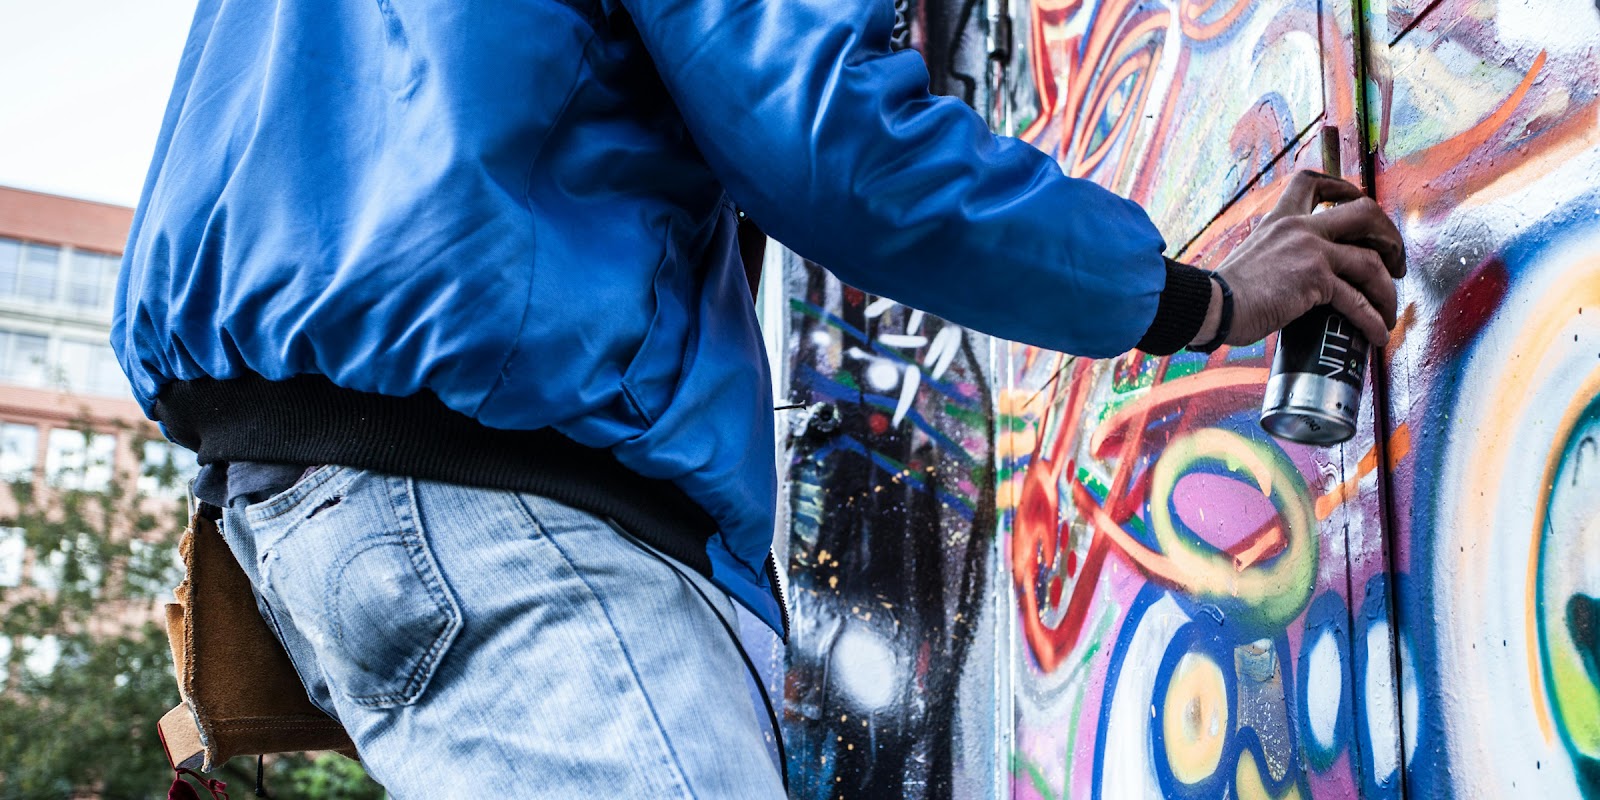 Persona pintando un graffiti | Fuente: Pexels